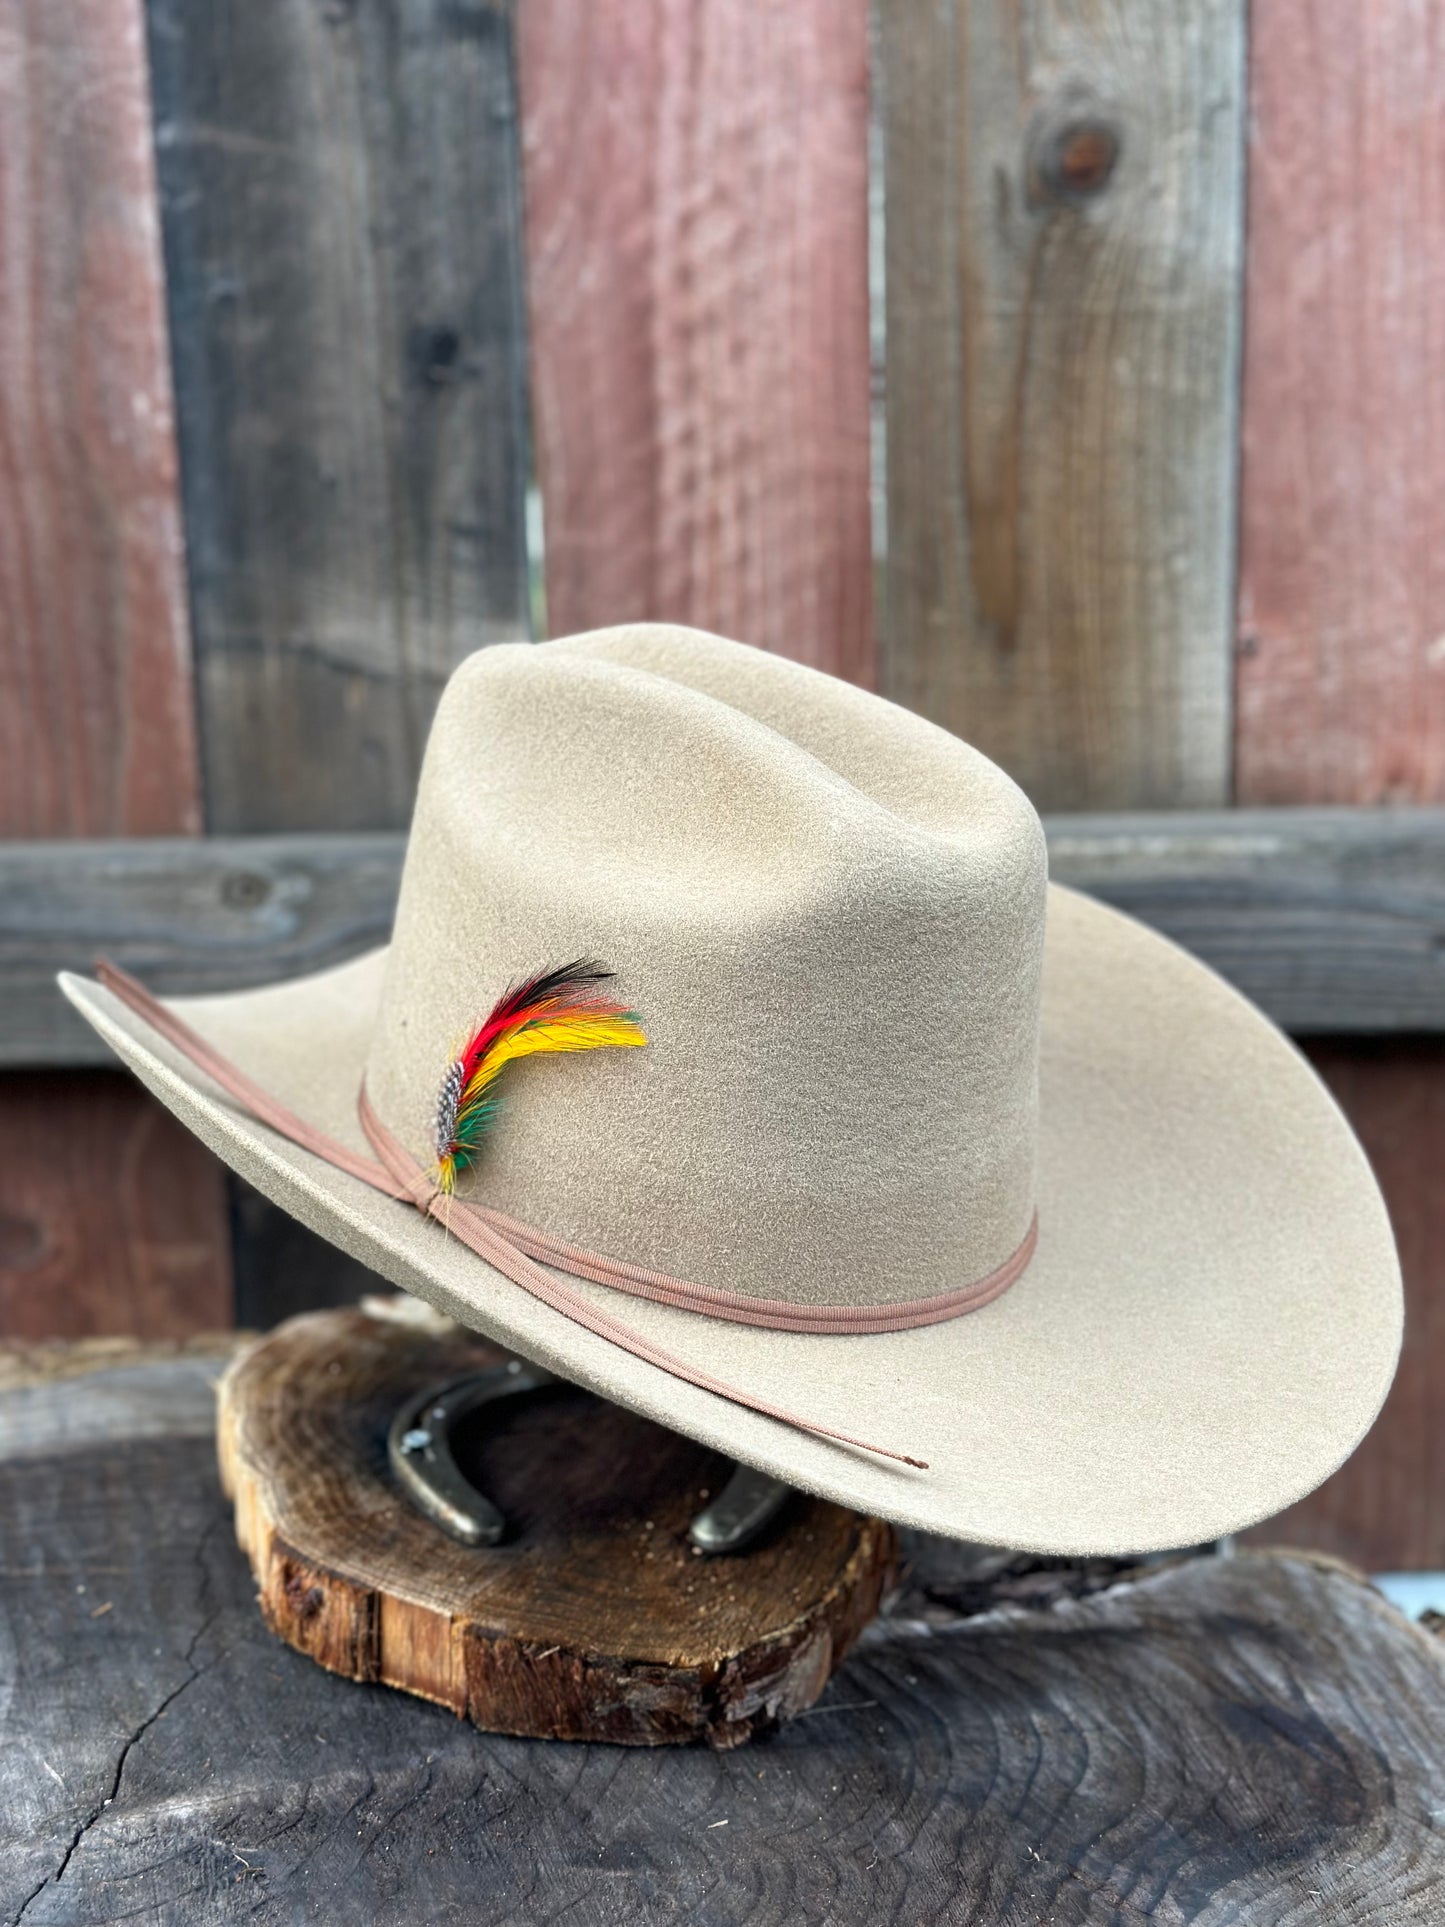 Laredo Wool Felt Hat Ranchero Style Nuez